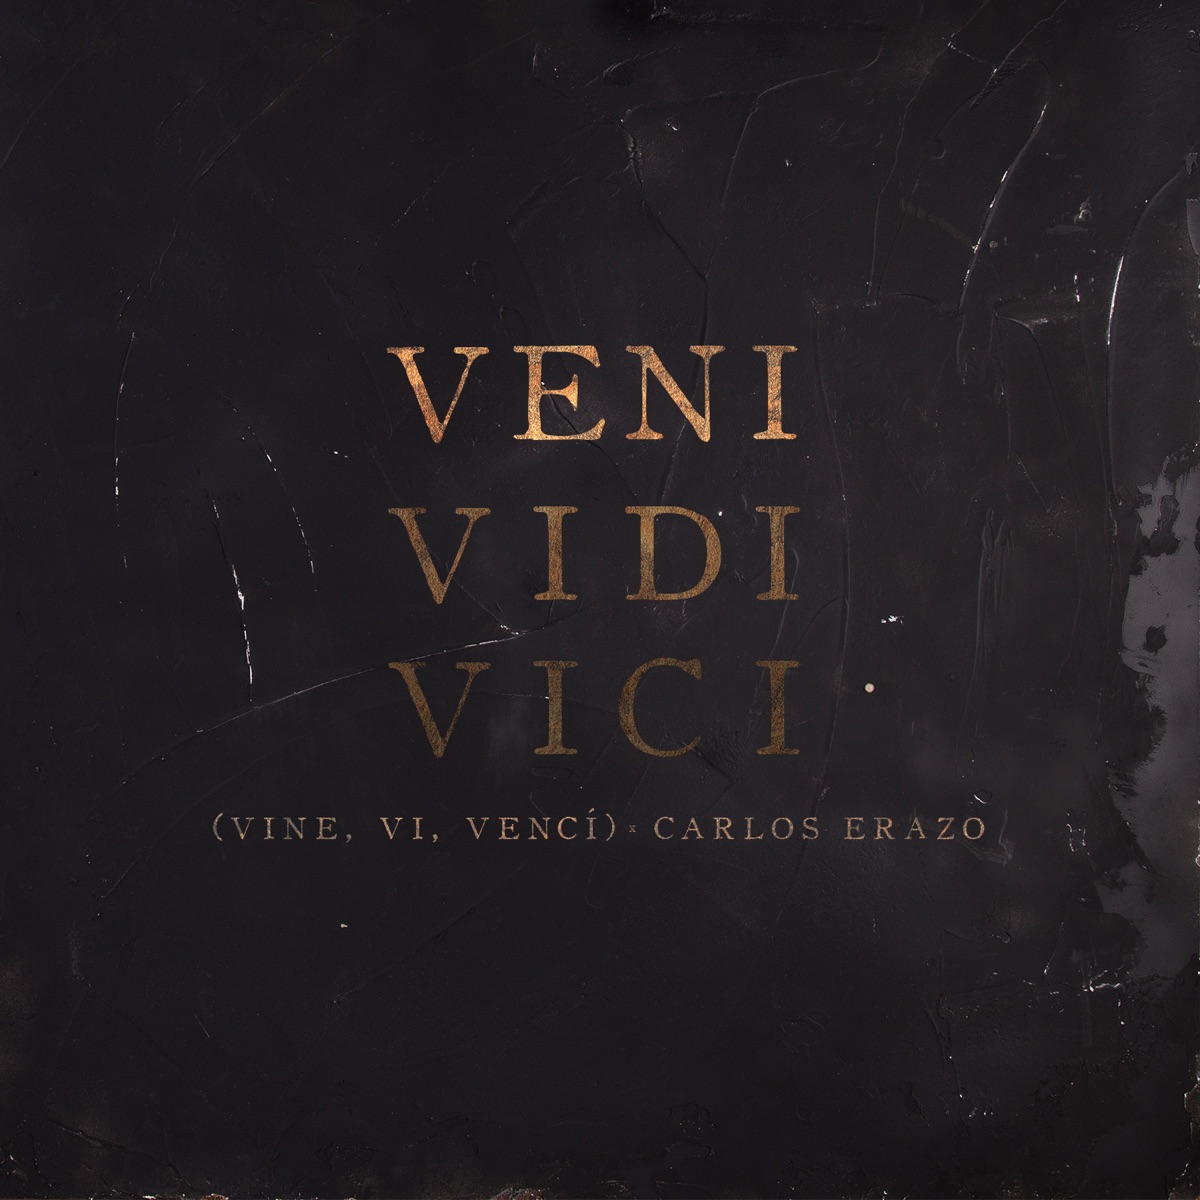 Veni Vidi Vici (Vine, Ví, Vencí) - Single - Album by Carlos Erazo